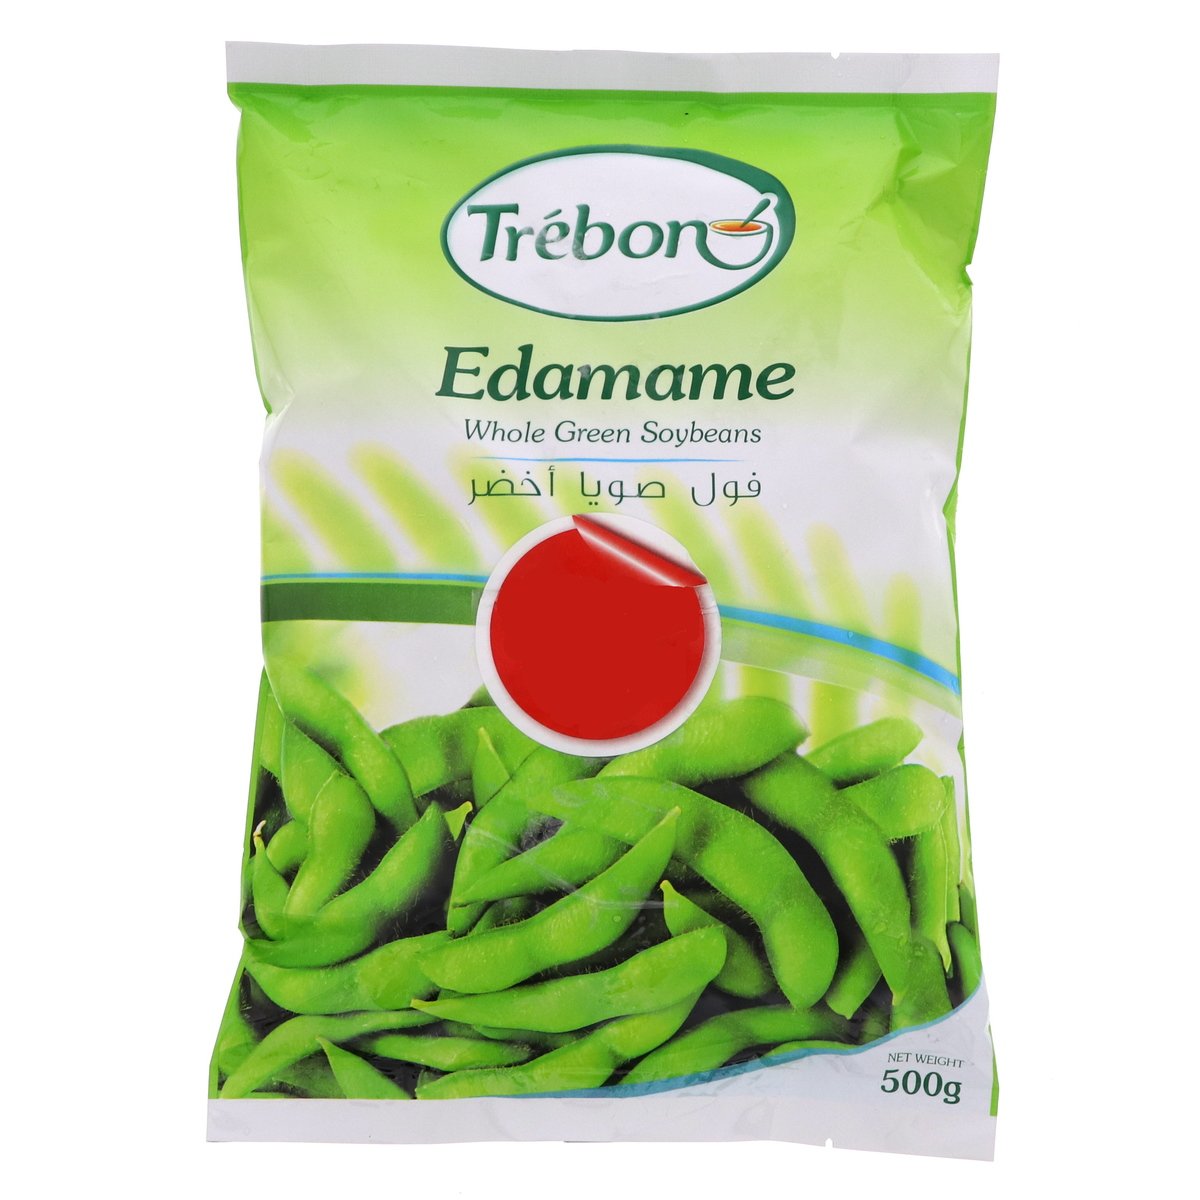 Trebon Edamame Whole Green Soybeans 500 g